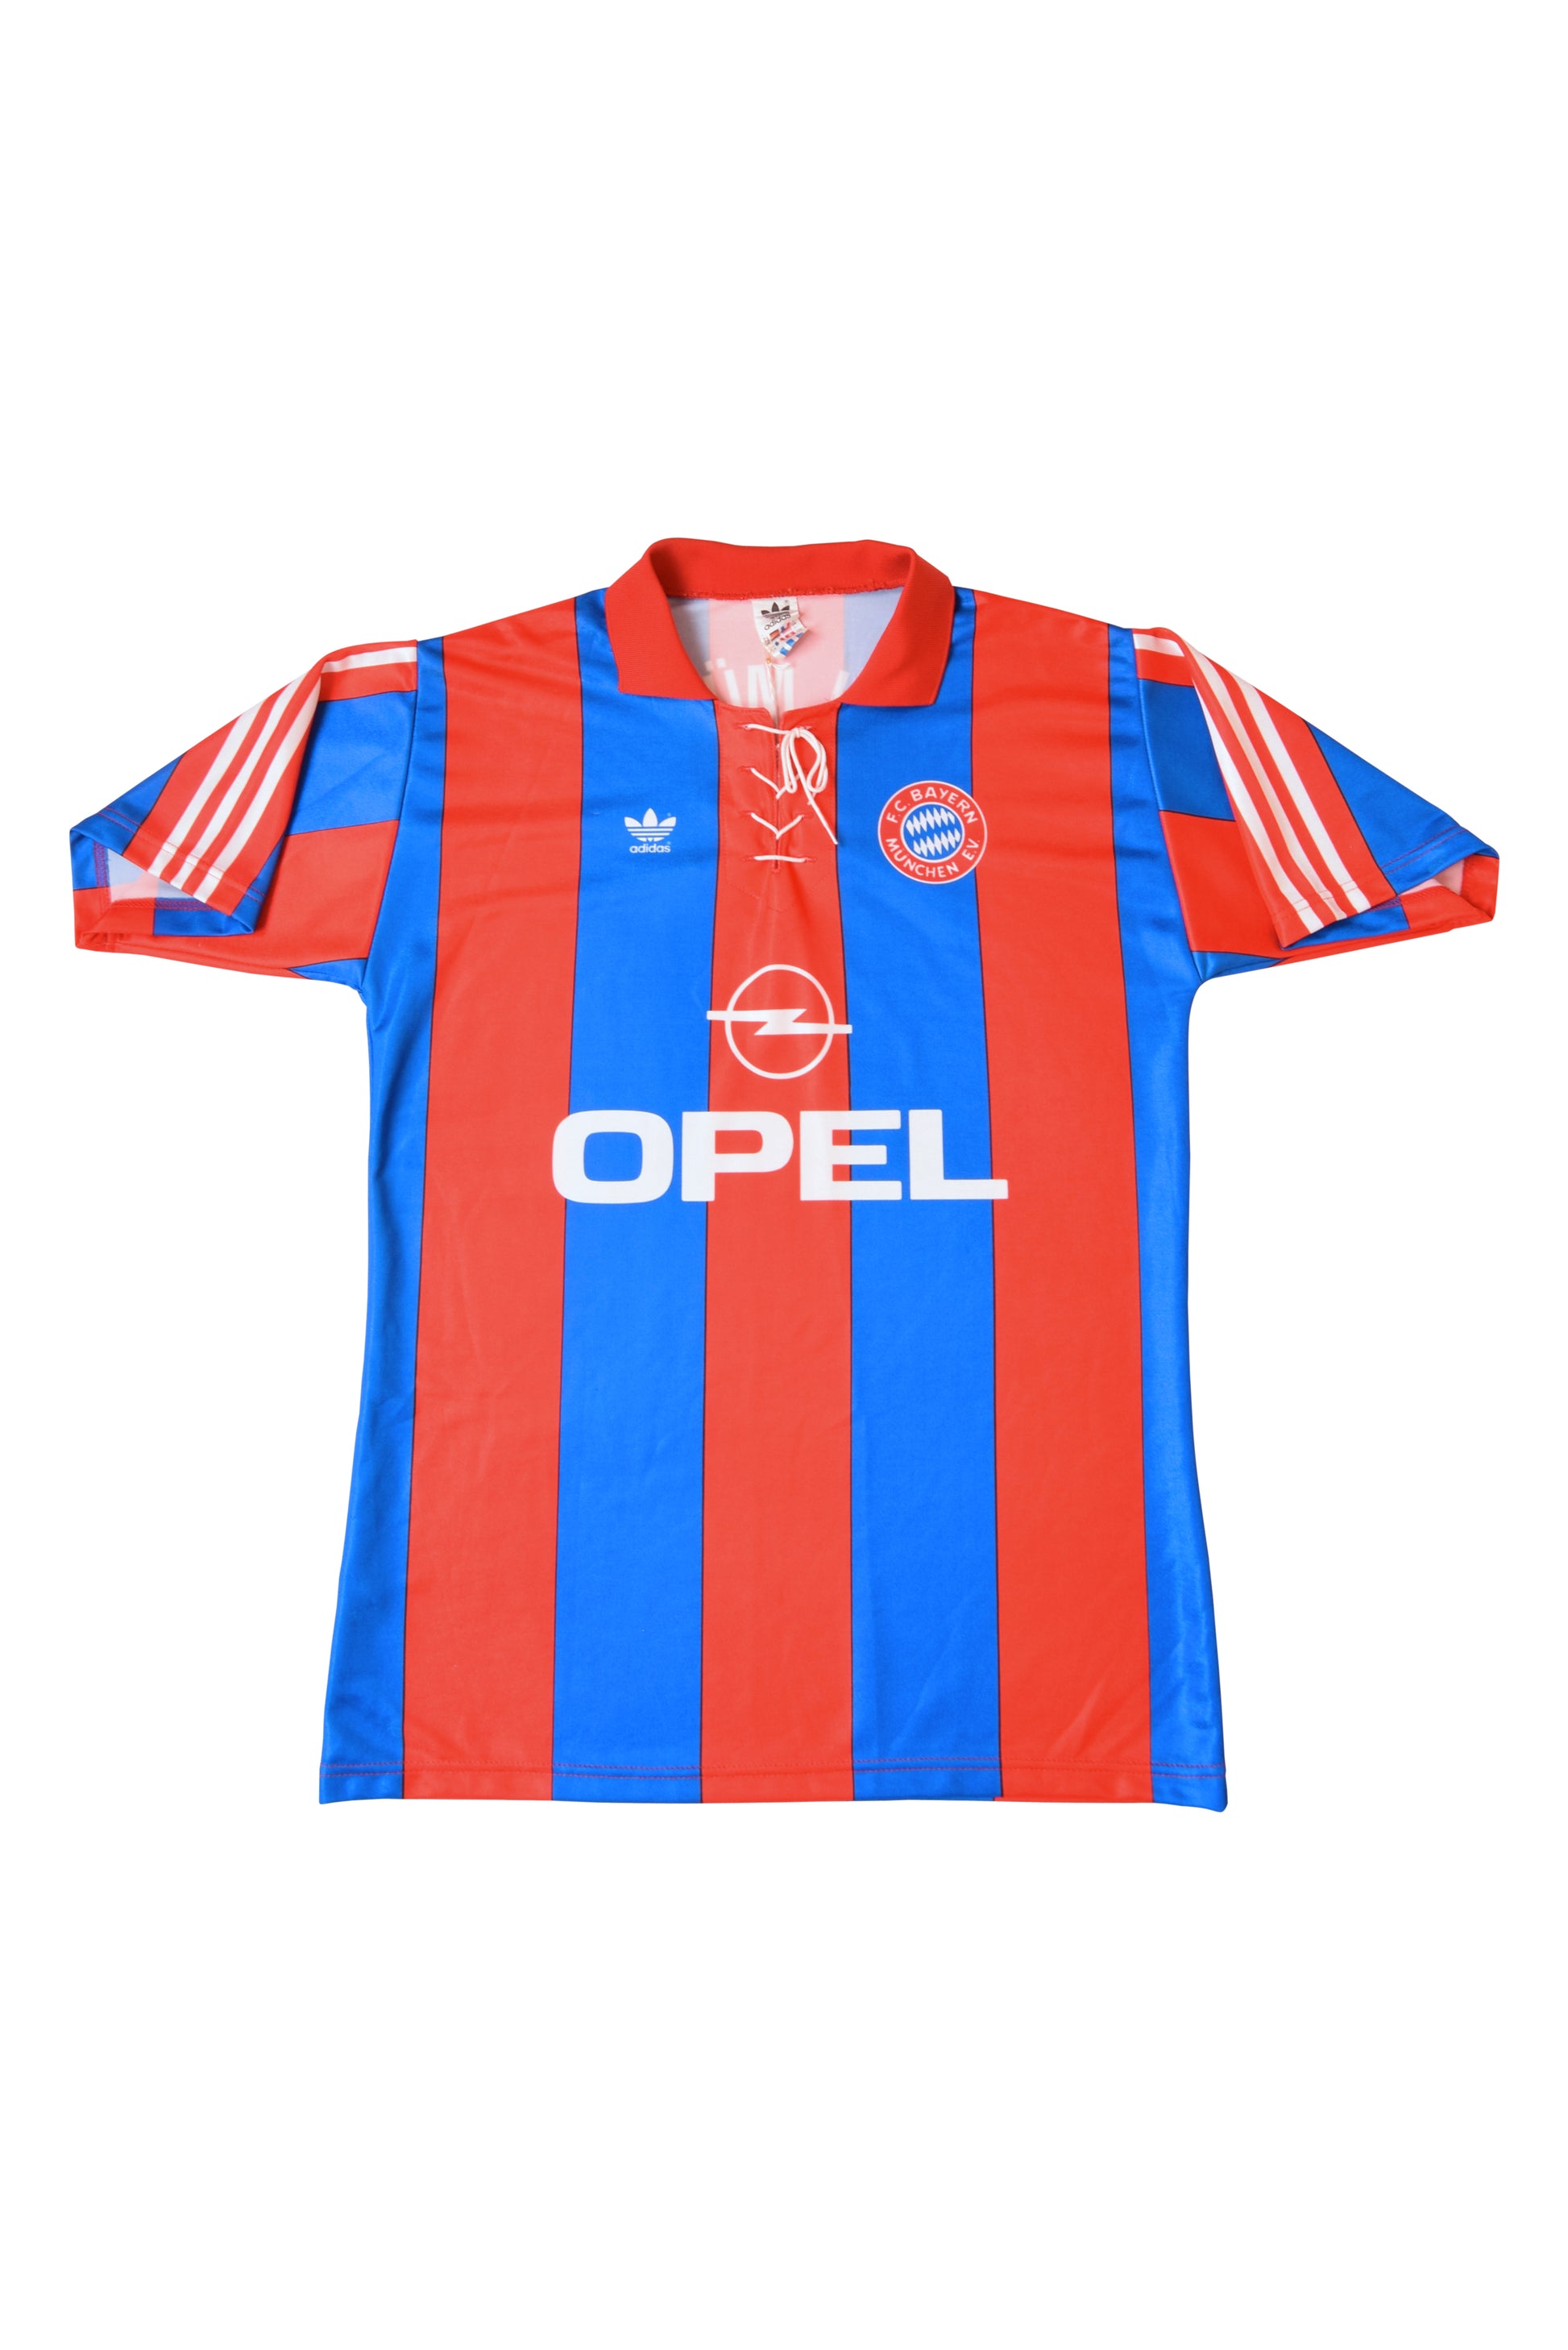 Very Rare Bayern Munich / Munchen Adidas 1989-1990 Special Edition 90th Anniversary Football shirt